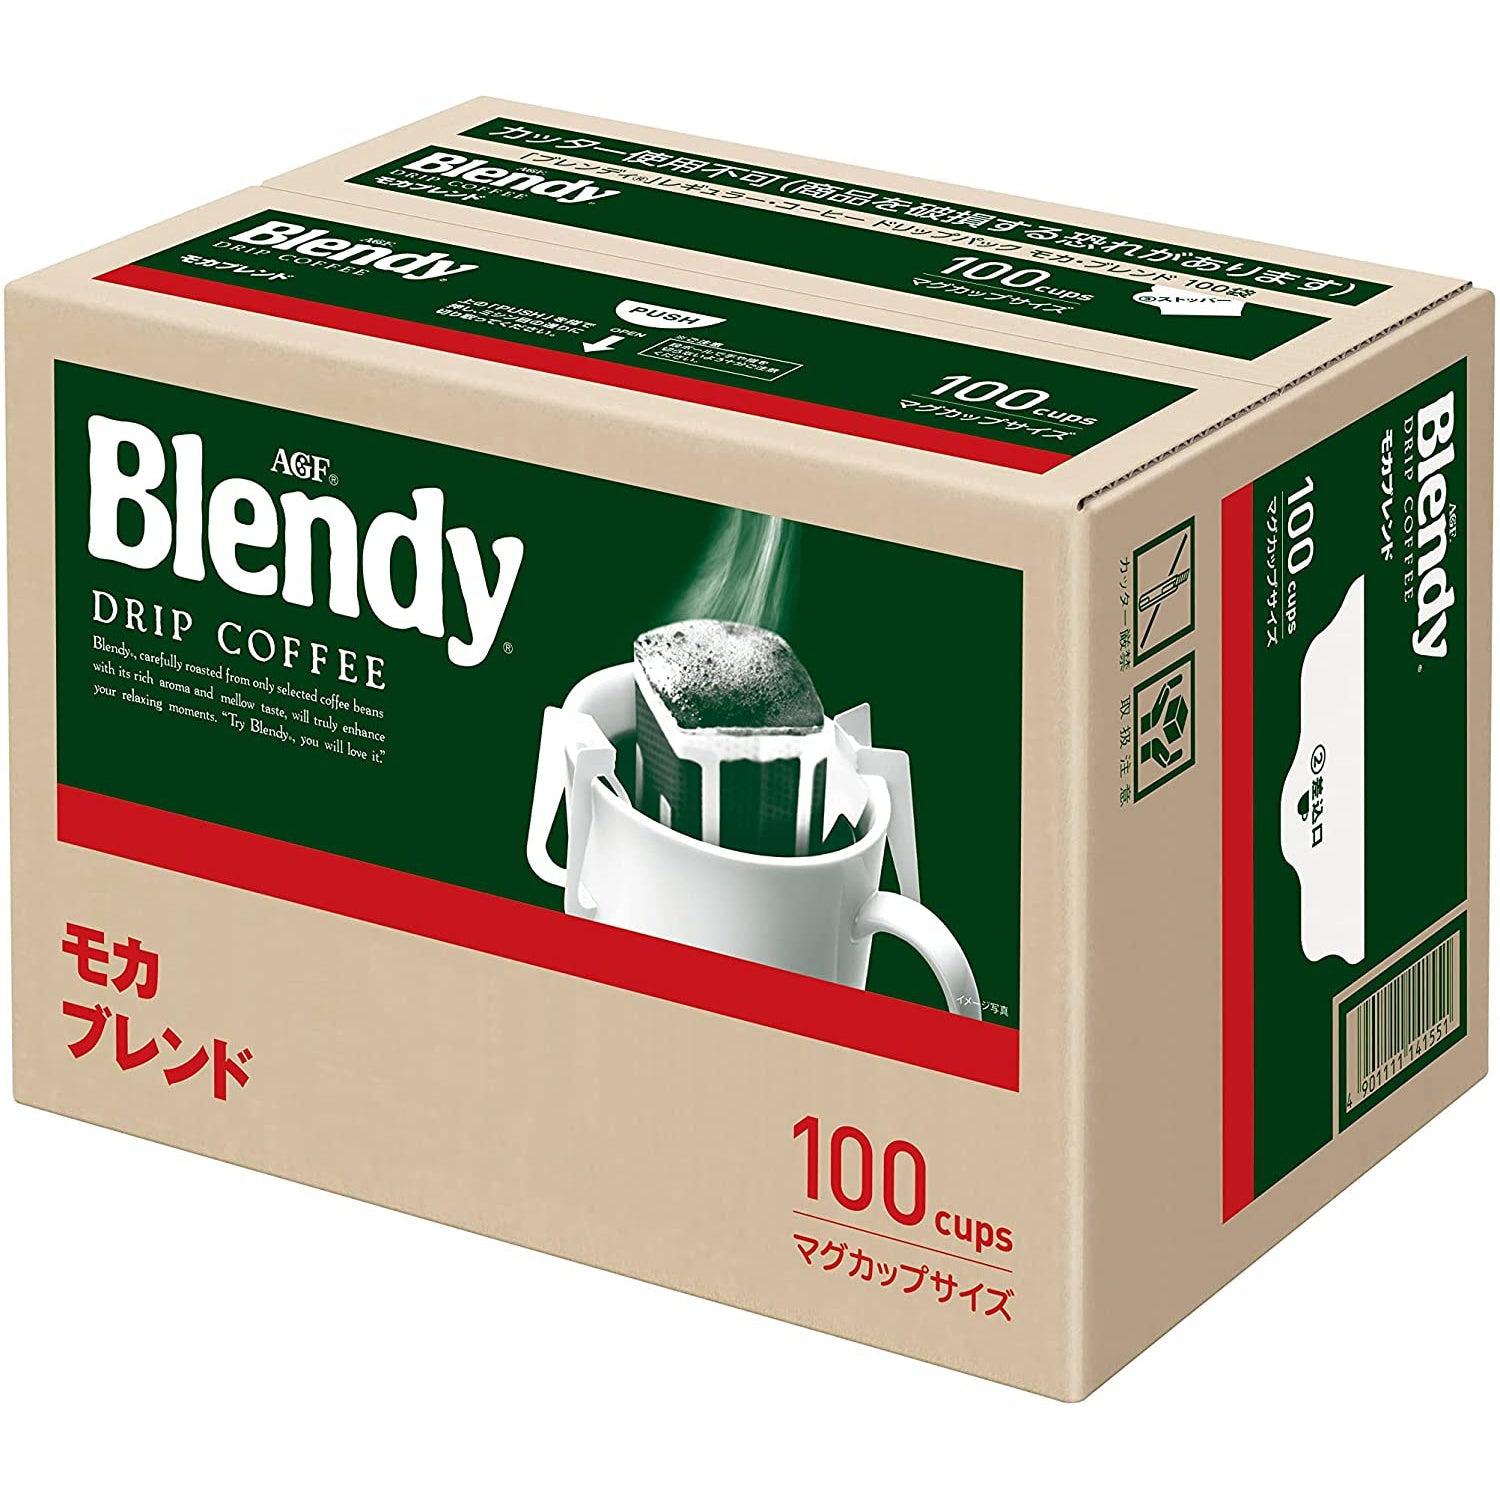 AGF Blendy Drip Coffee Mocha Blend 100 Bags, Japanese Taste